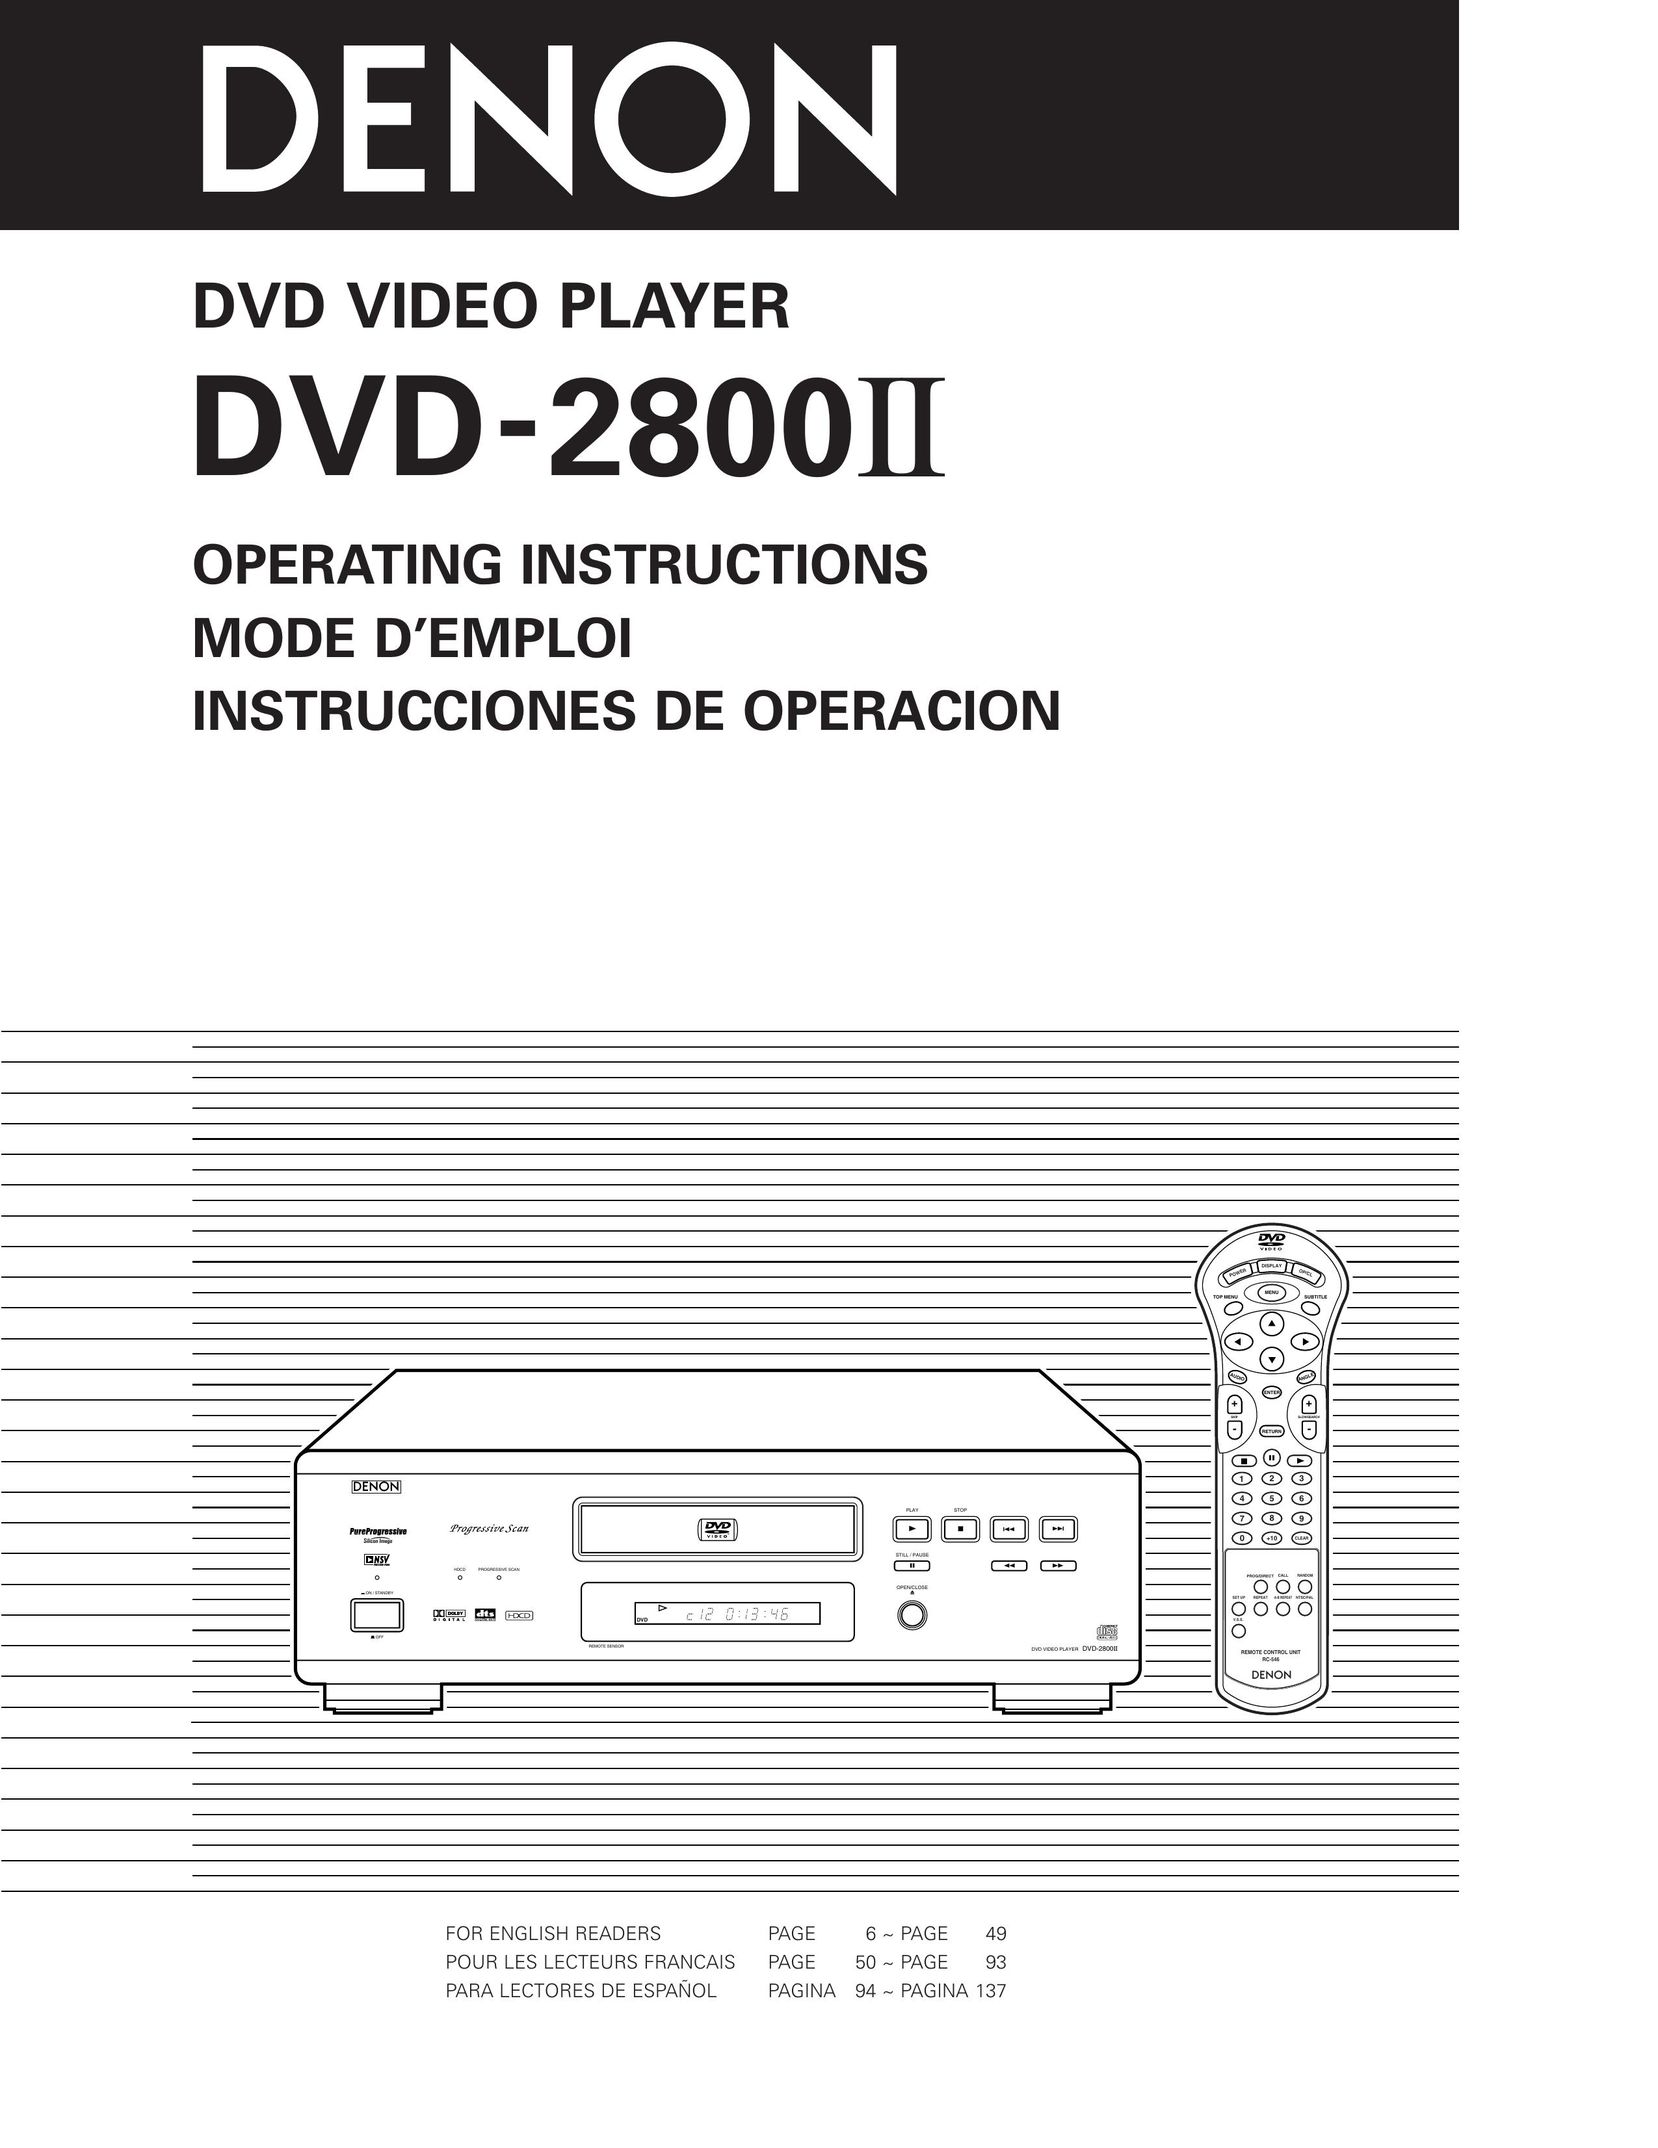 Denon DVD-2800II DVD Player User Manual